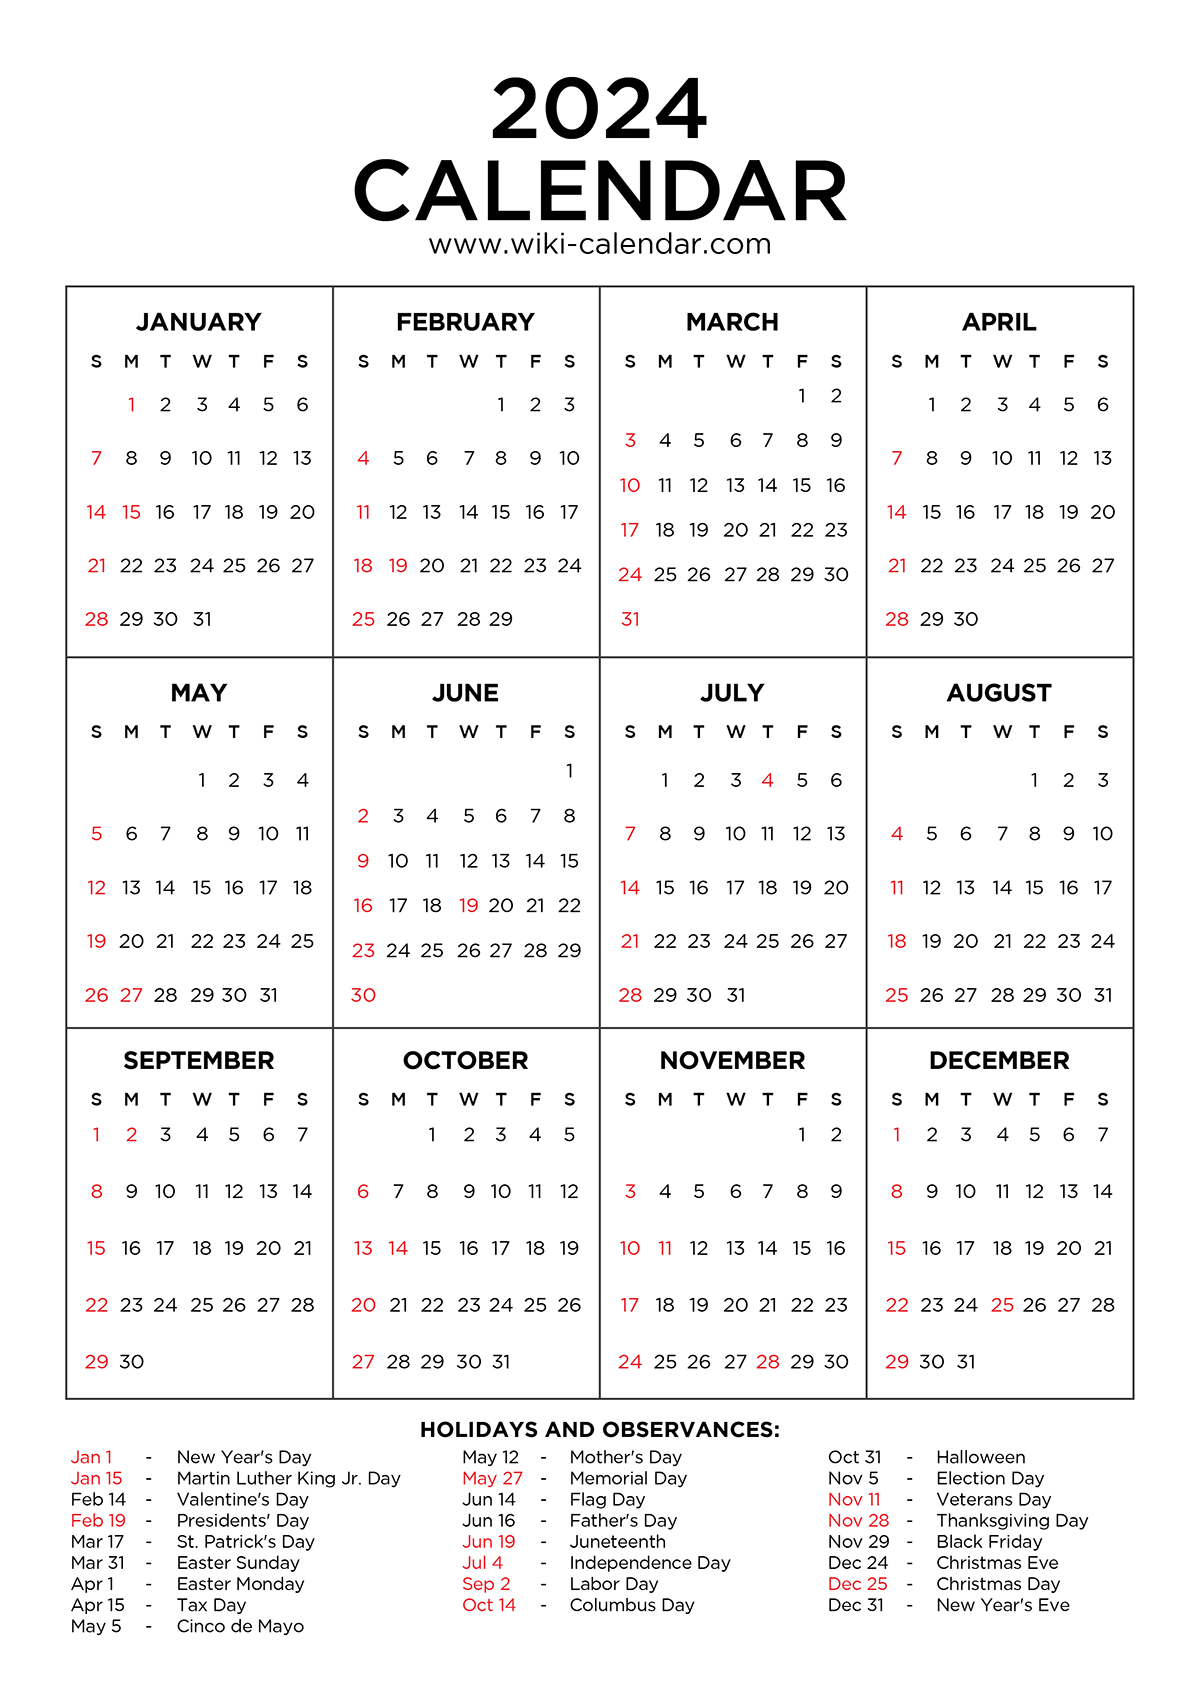 Year 2024 Calendar Printable With Holidays - Wiki Calendar intended for Free Printable Calendar 2024 With Holidays Canada